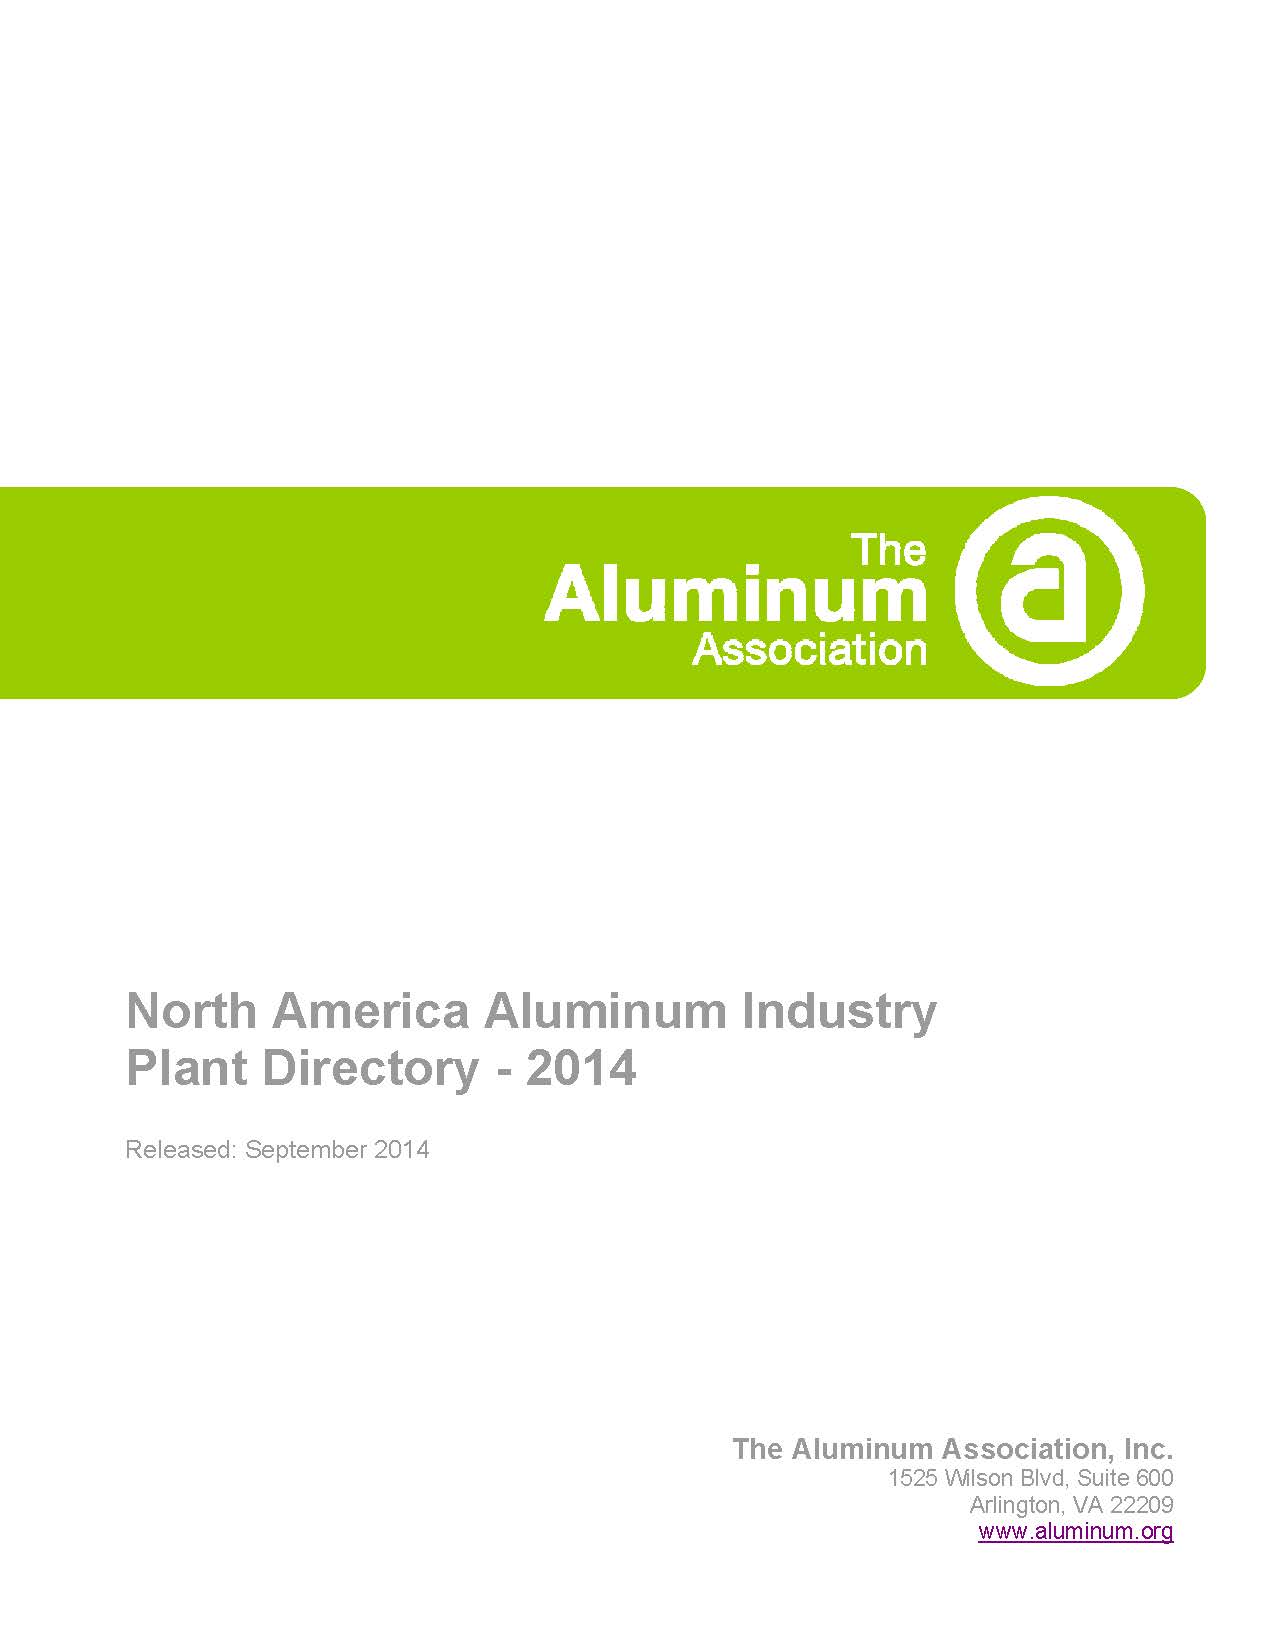 North America Aluminum Industry Plant Directory - 2014